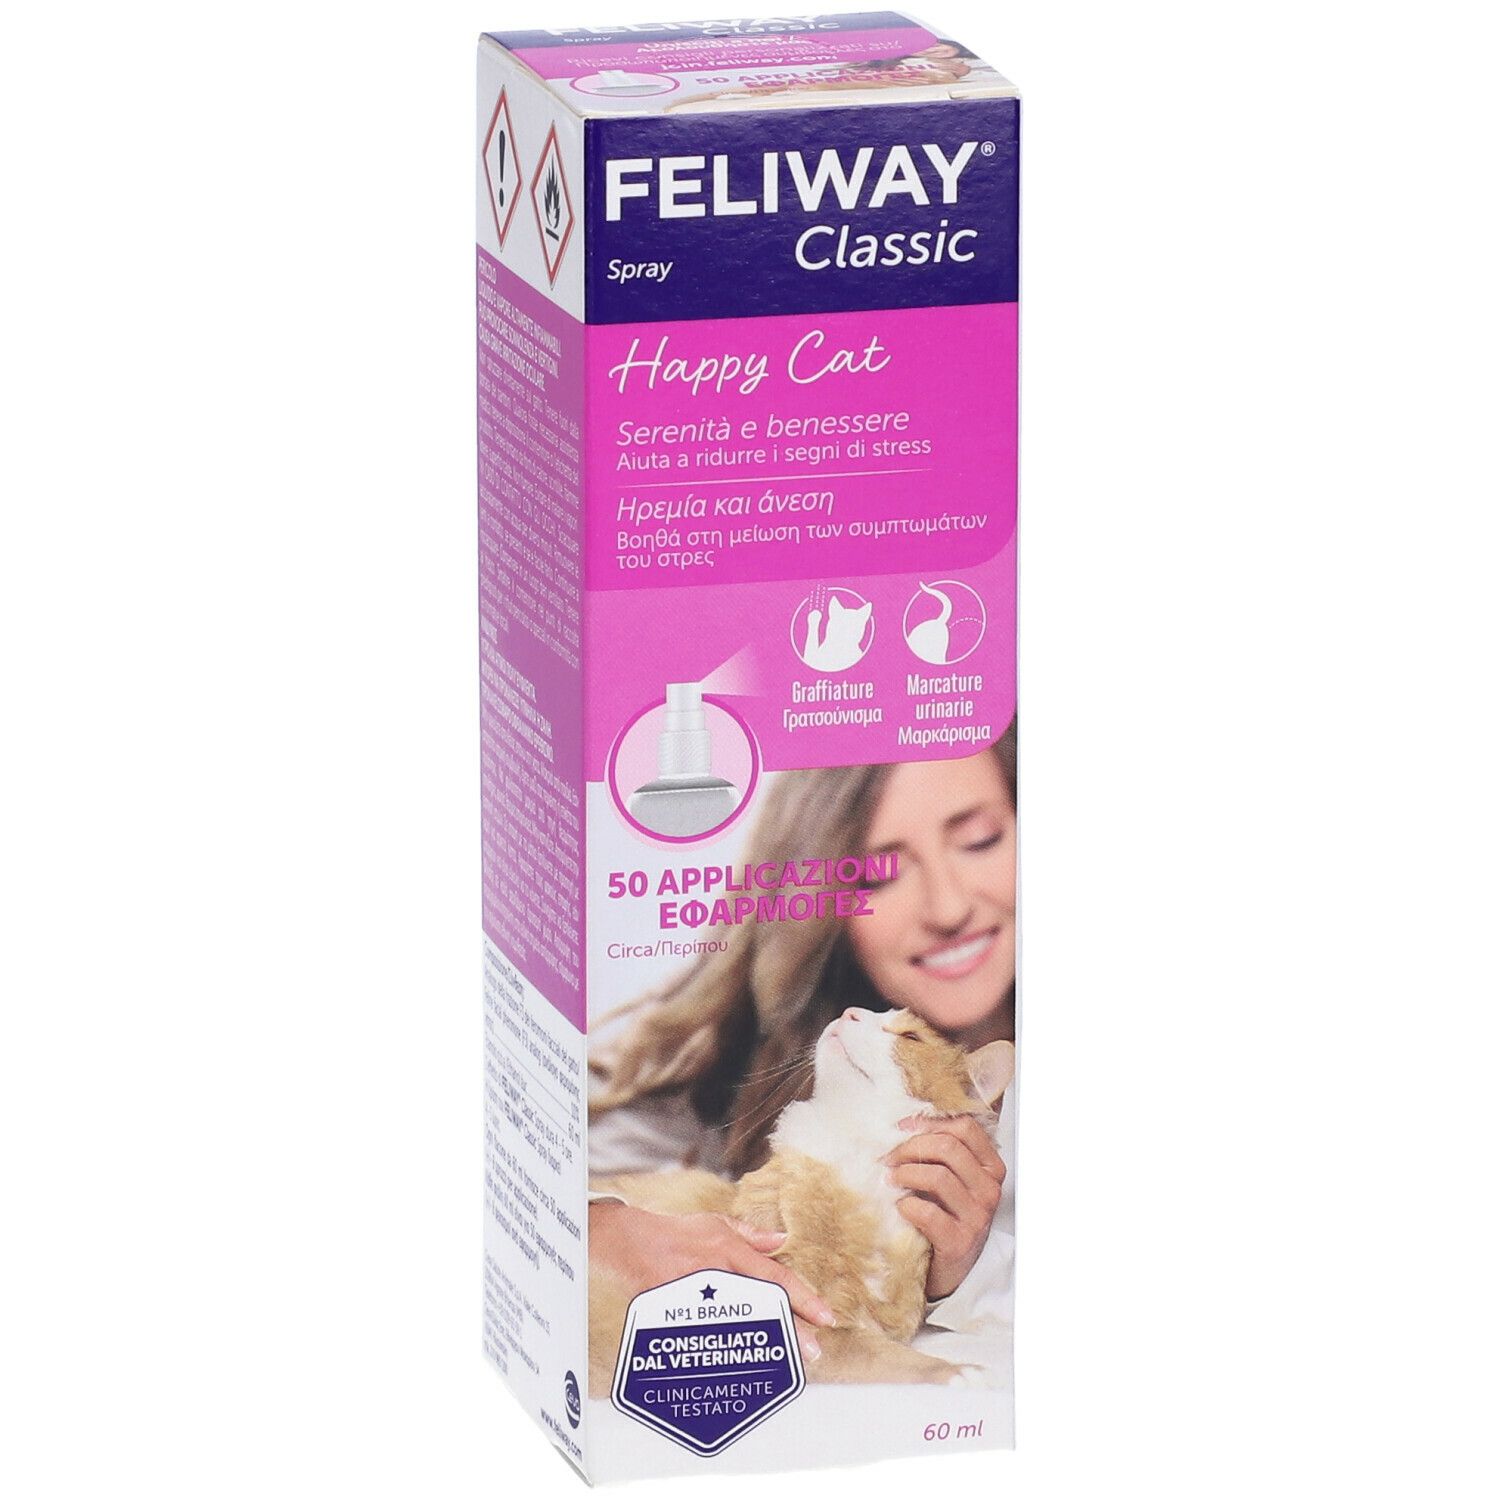 Feliway Spray 60Ml: acquista online in offerta Feliway Spray 60Ml